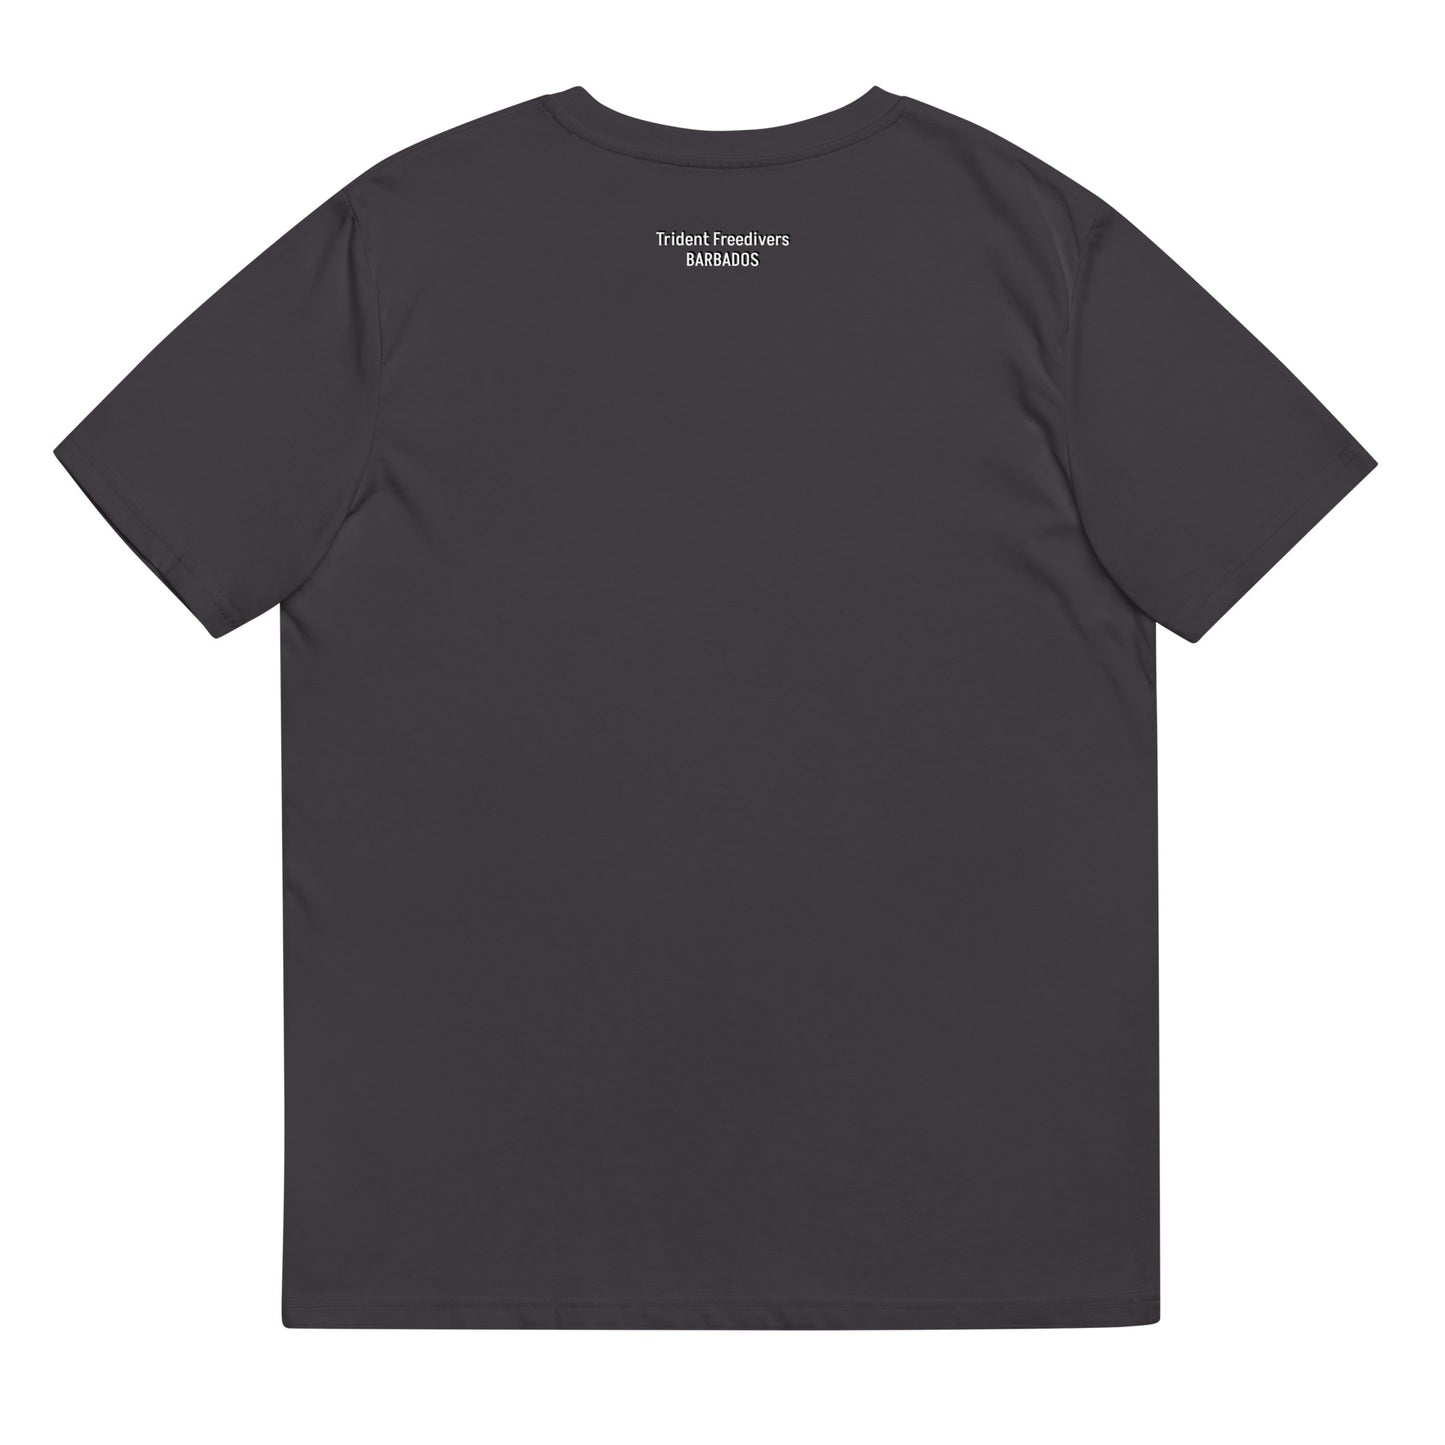 Brandons Unisex organic cotton t-shirt - Da Spot Collection